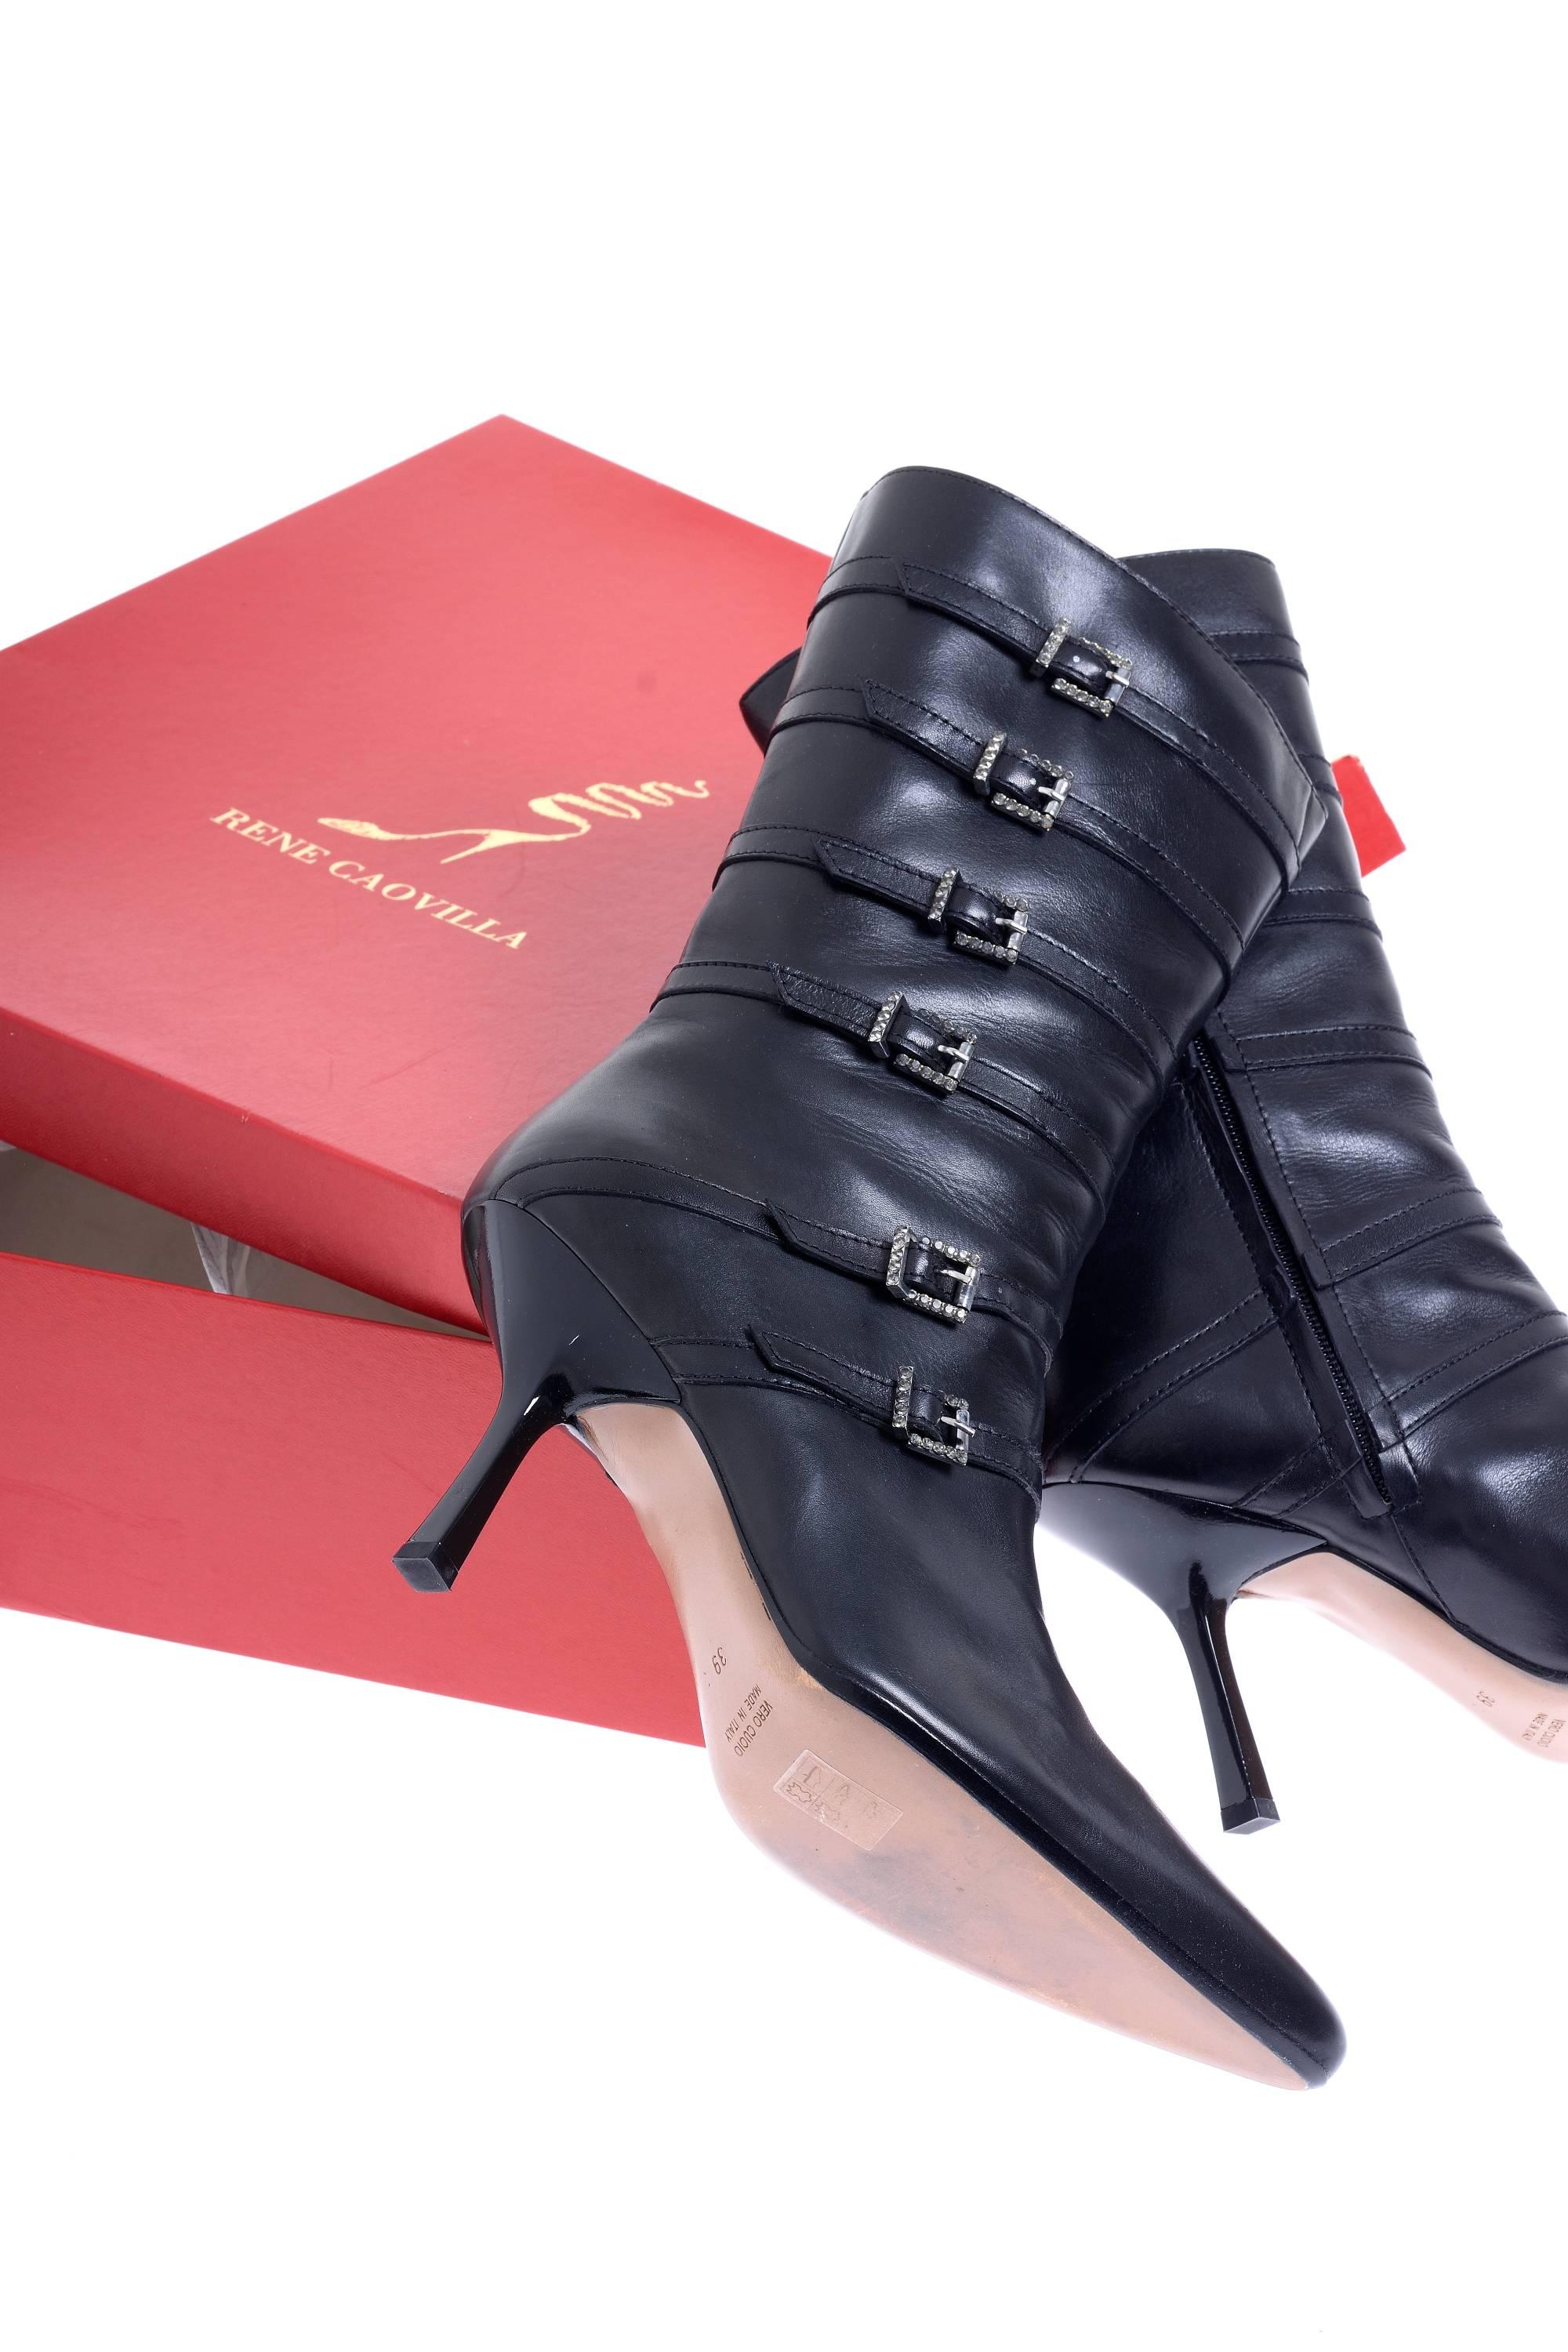 Women's RENE CAOVILLA Black Leather Buckles High Heel Boots EU 39 For Sale